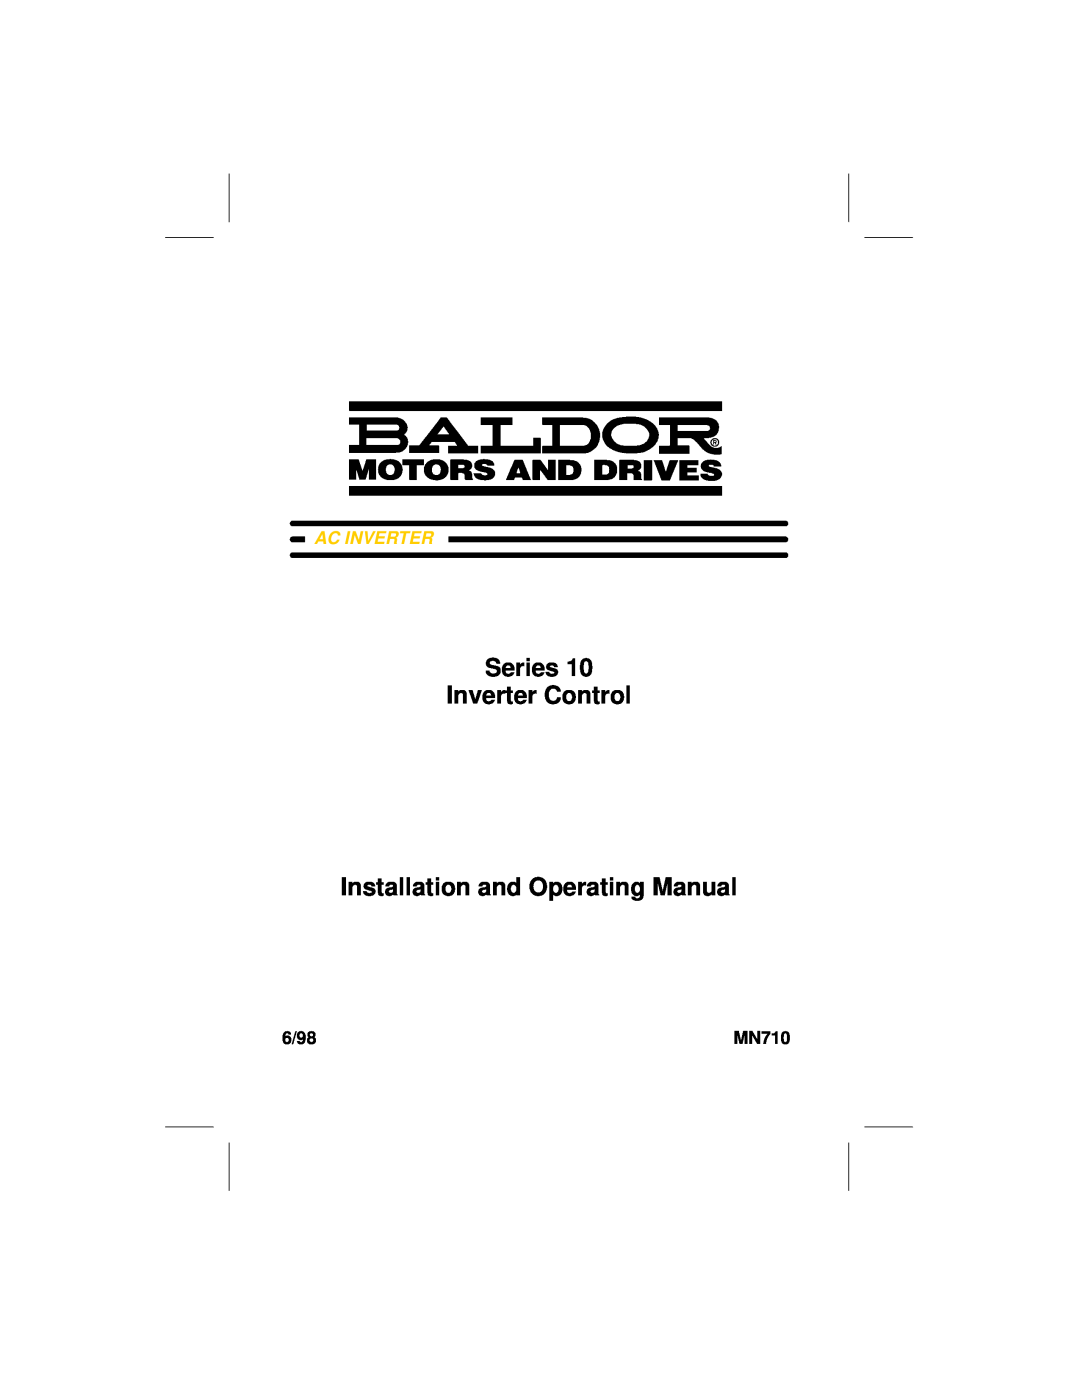 Baldor ID101F50-E manual 6/98, MN710, Series Inverter Control Installation and Operating Manual, Ac Inverter 